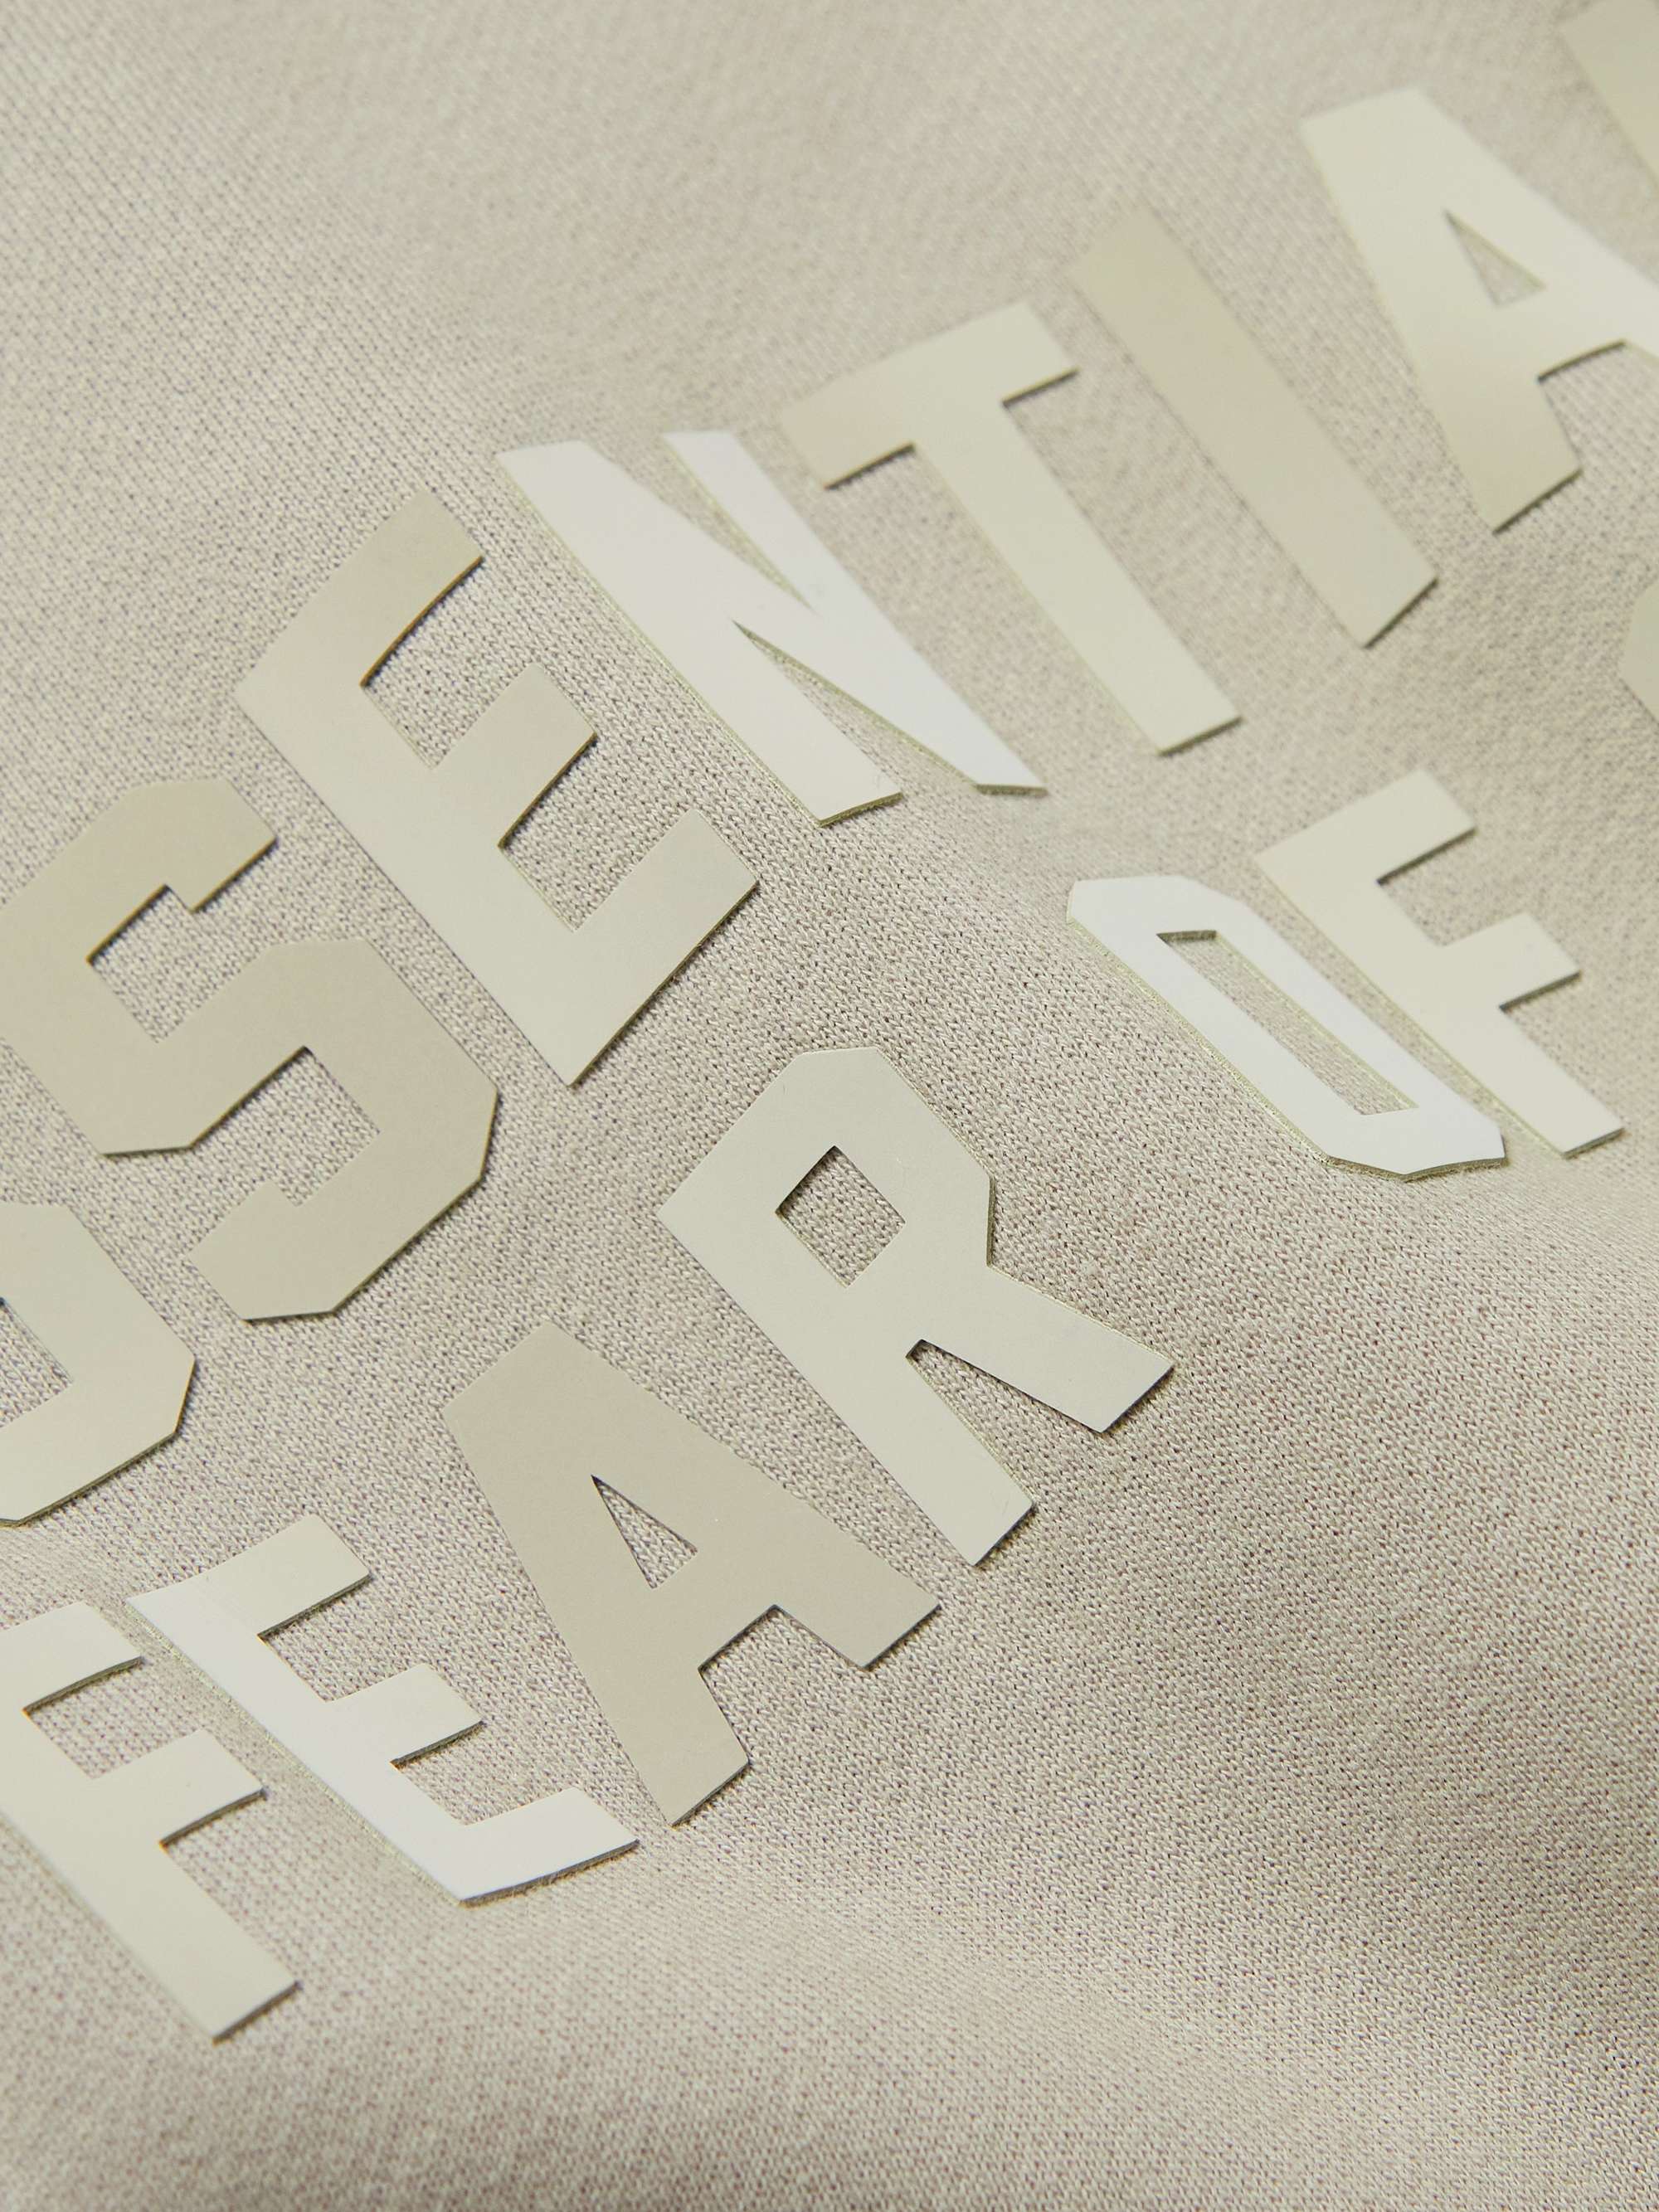 FEAR OF GOD ESSENTIALS Logo-Appliquéd Cotton-Blend Jersey Hoodie